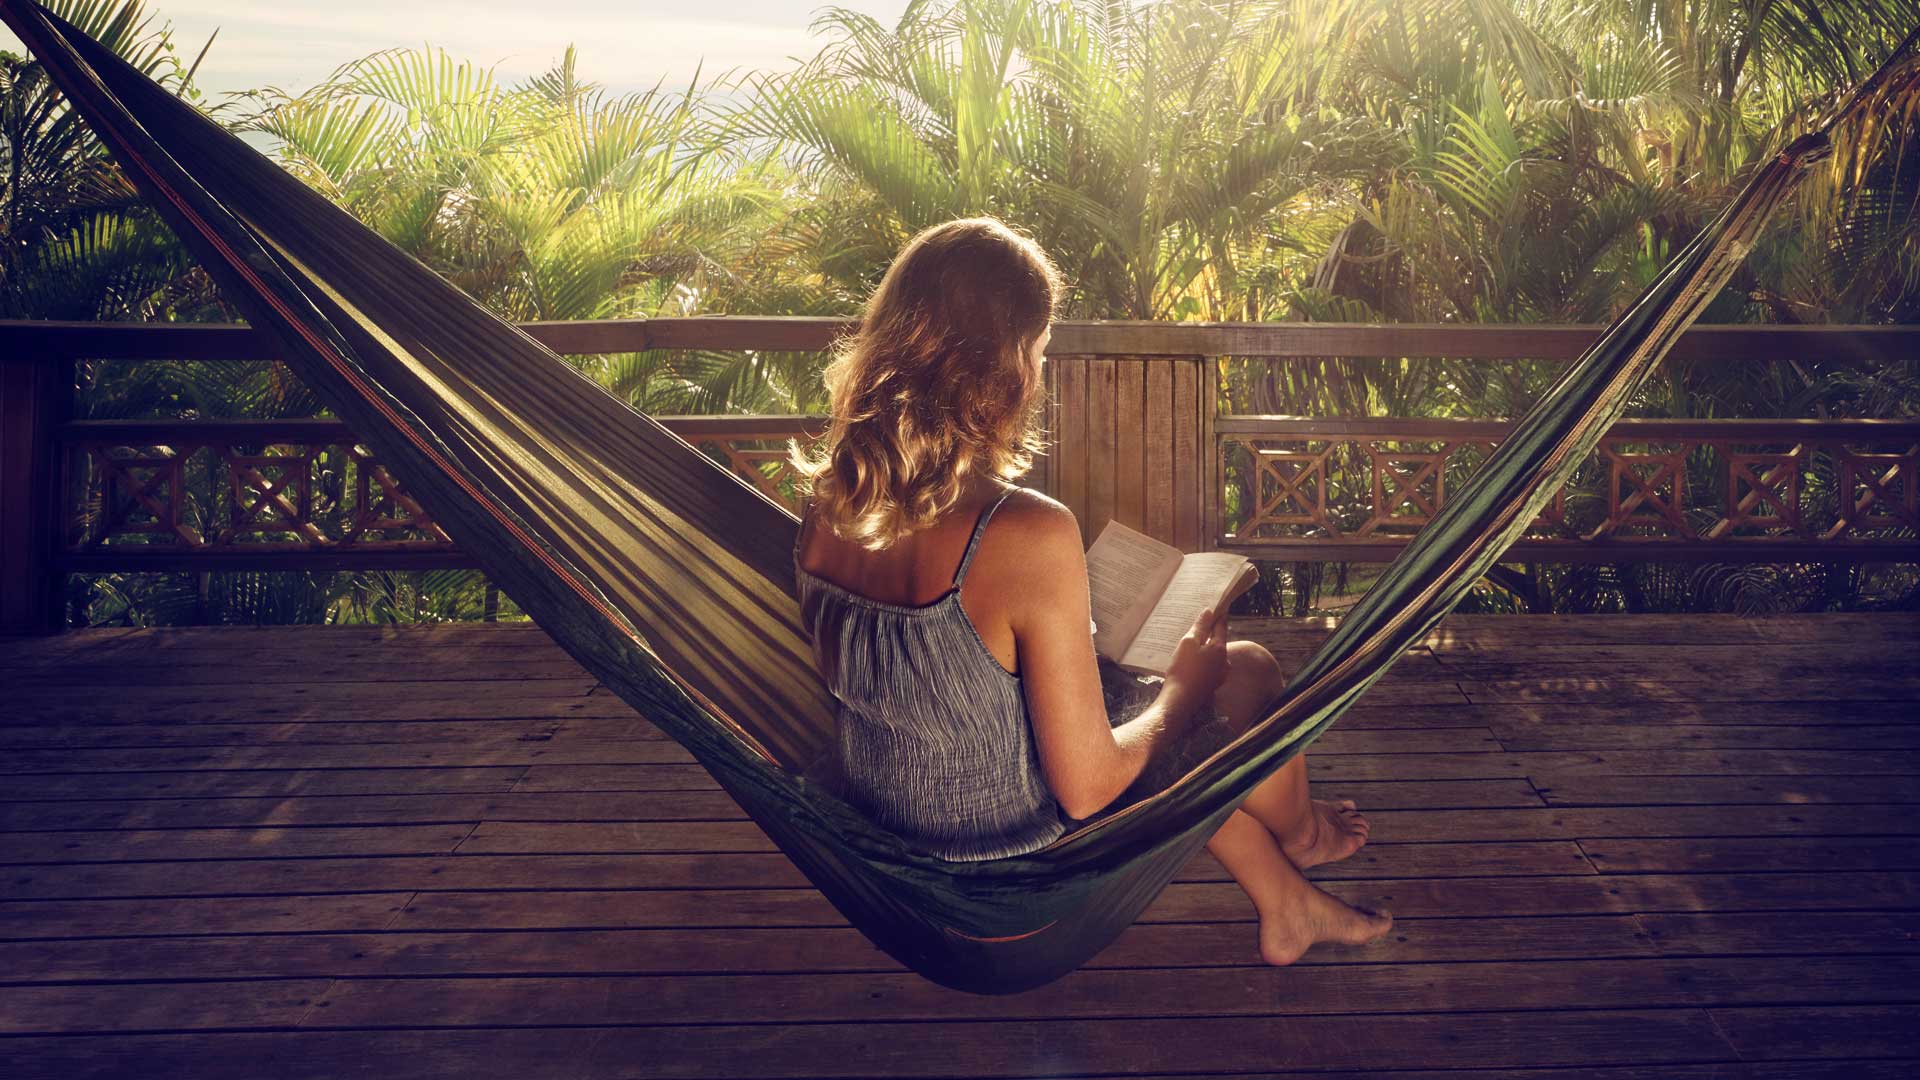 A girl reading a book in a hammock